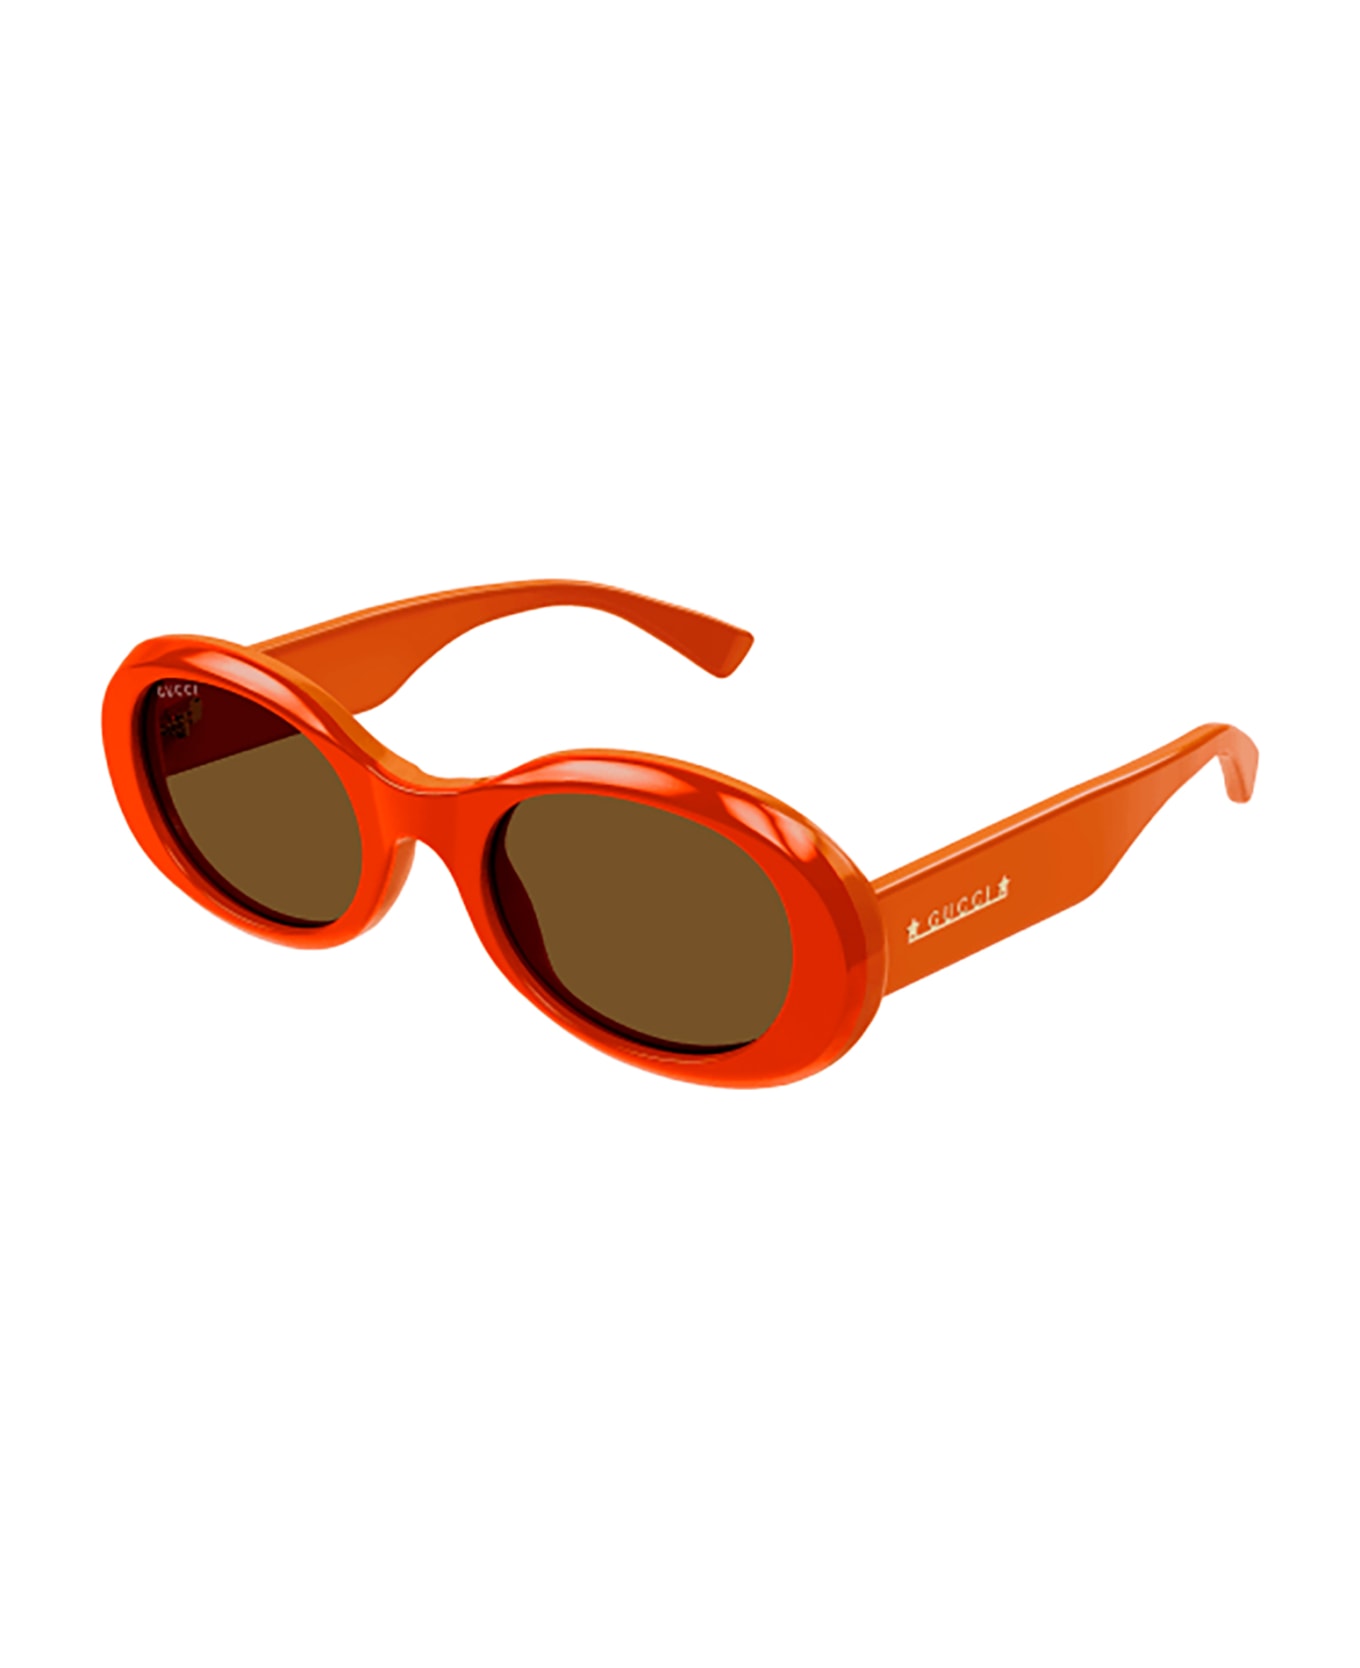 Gucci Eyewear GG1587S Sunglasses - Orange Orange Brown サングラス